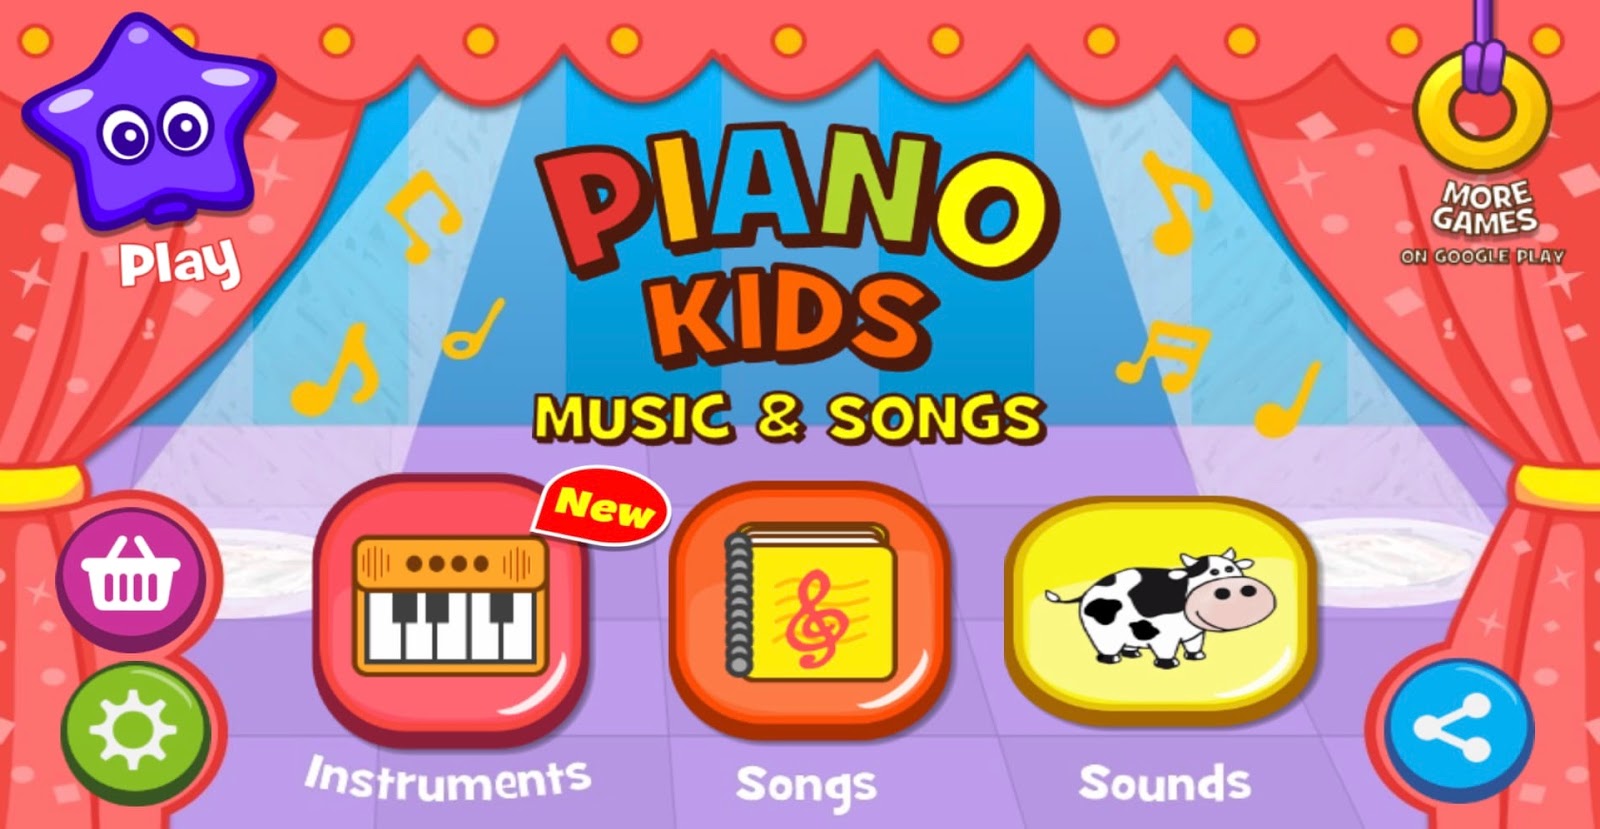 Piano play song. Игра Piano Kids. Piano Kids Music Songs. Piano Kids приложение. Пианино игра 2018.